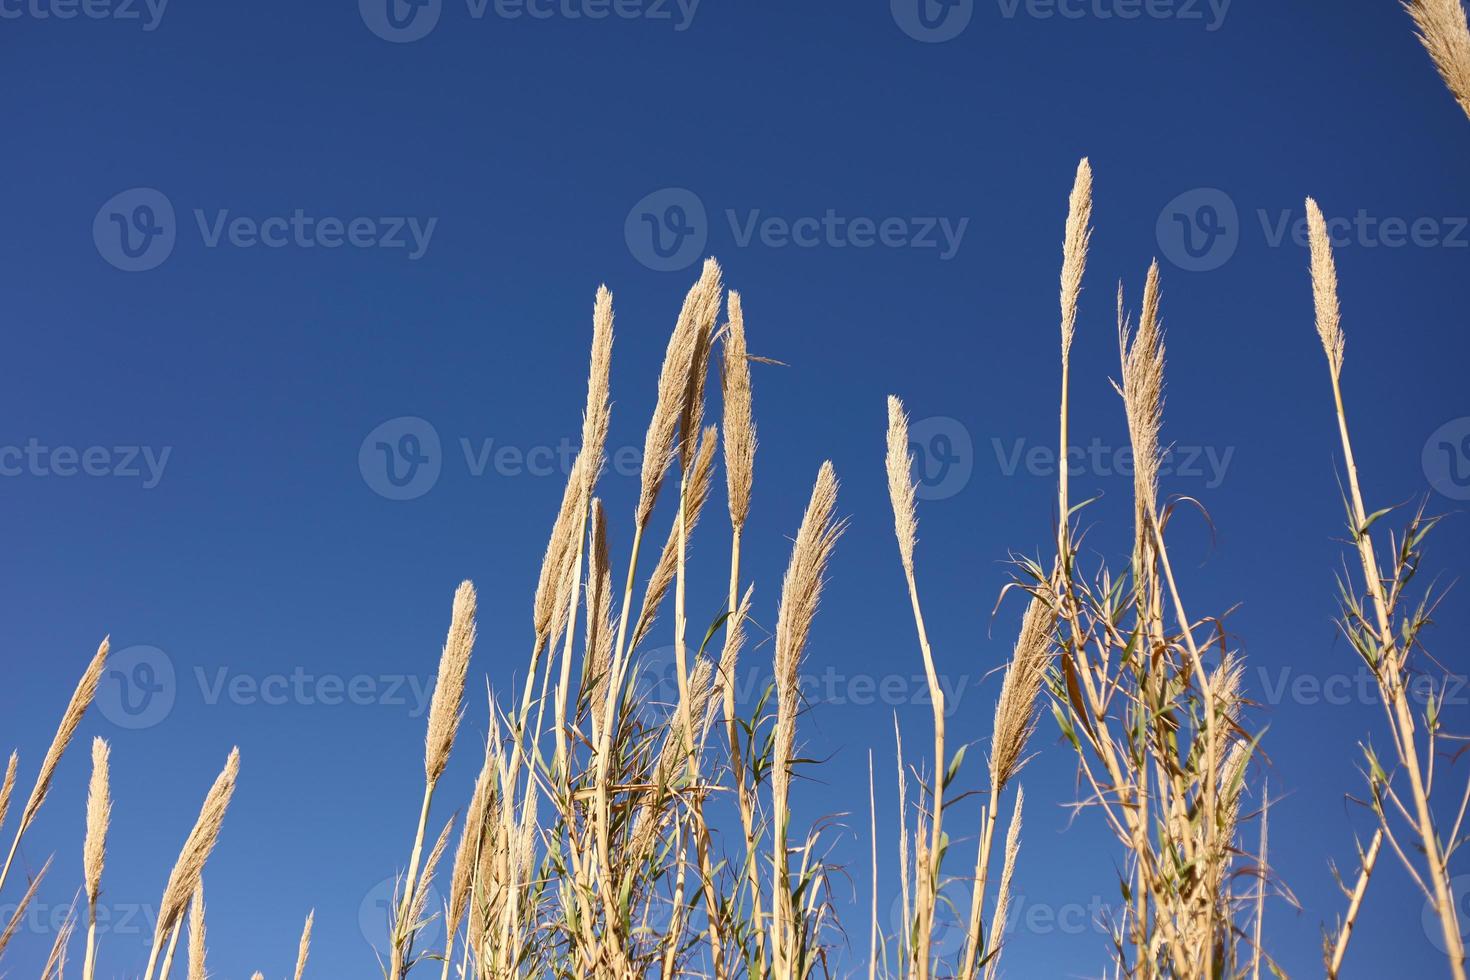 torrt gräs på blå himmelbakgrund. kopiera utrymme. selektivt fokus. foto